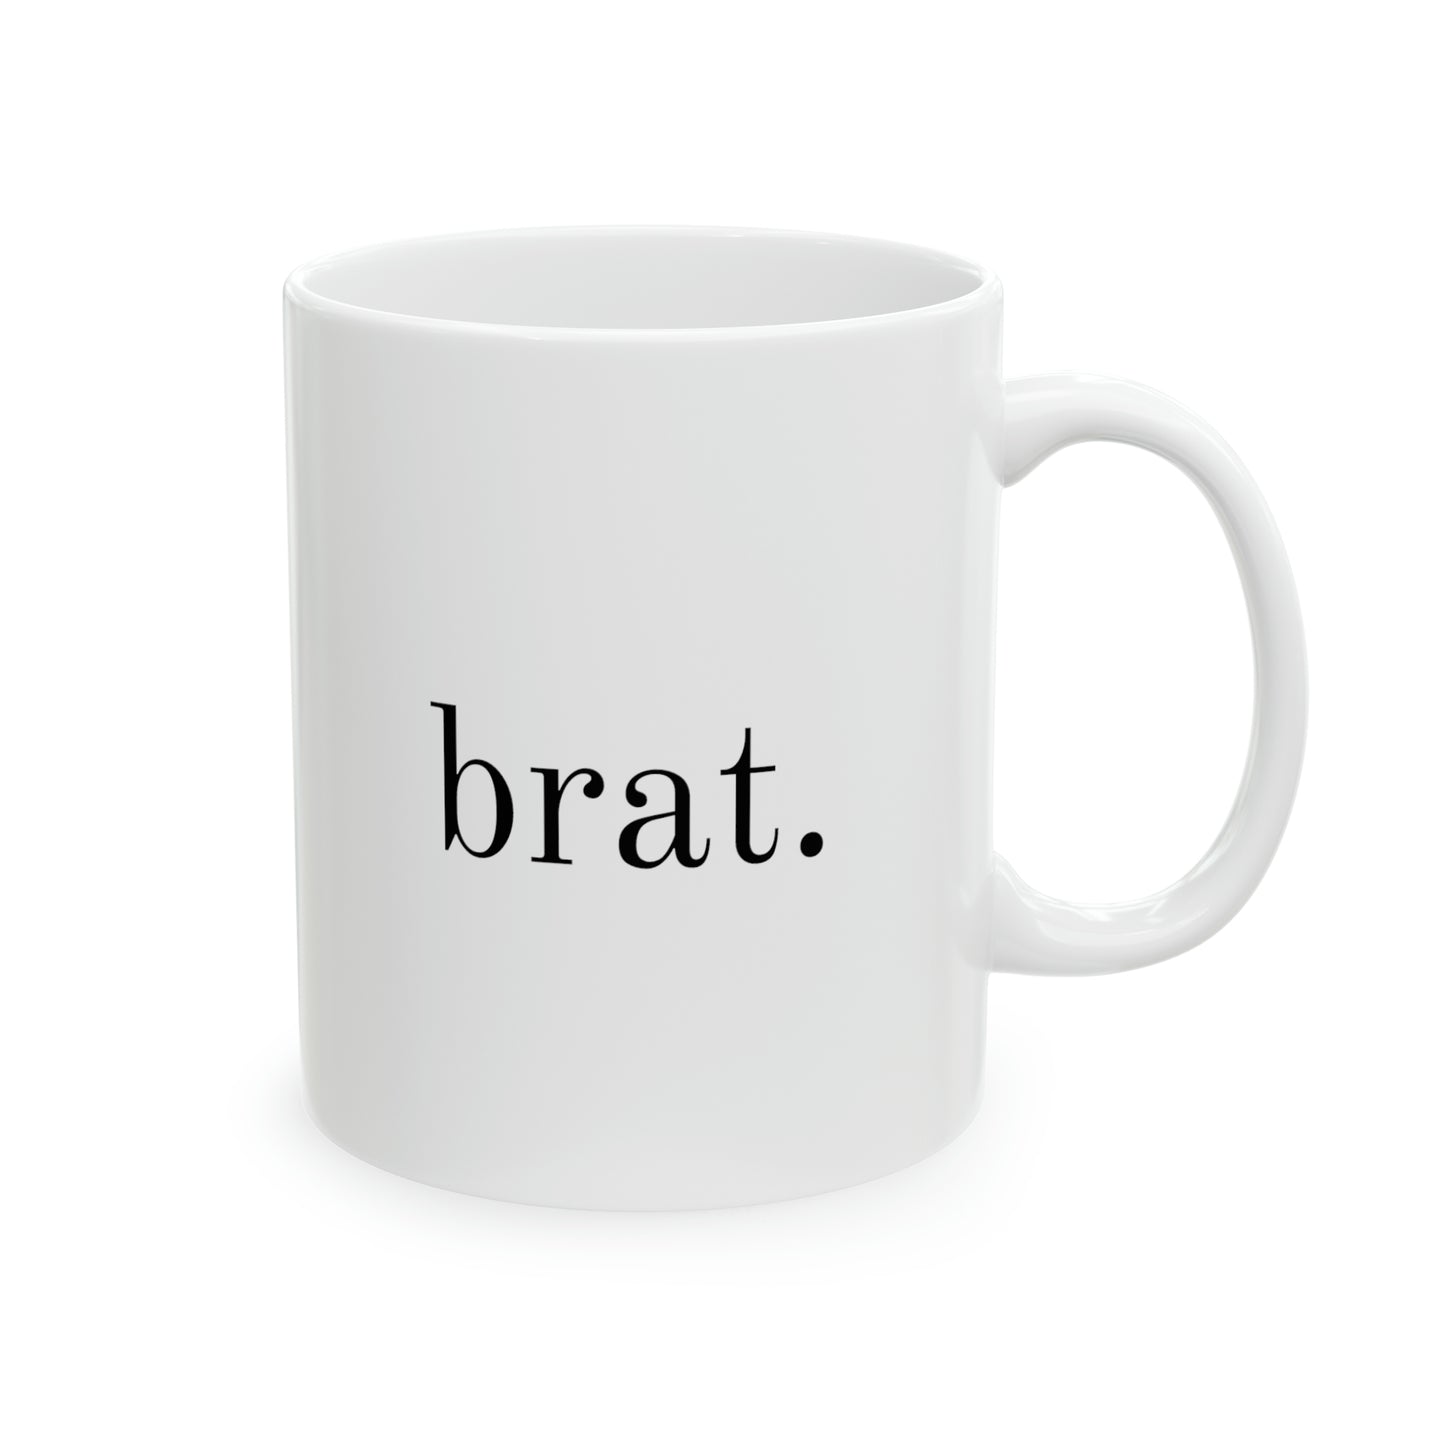 brat. — Coffee Mug